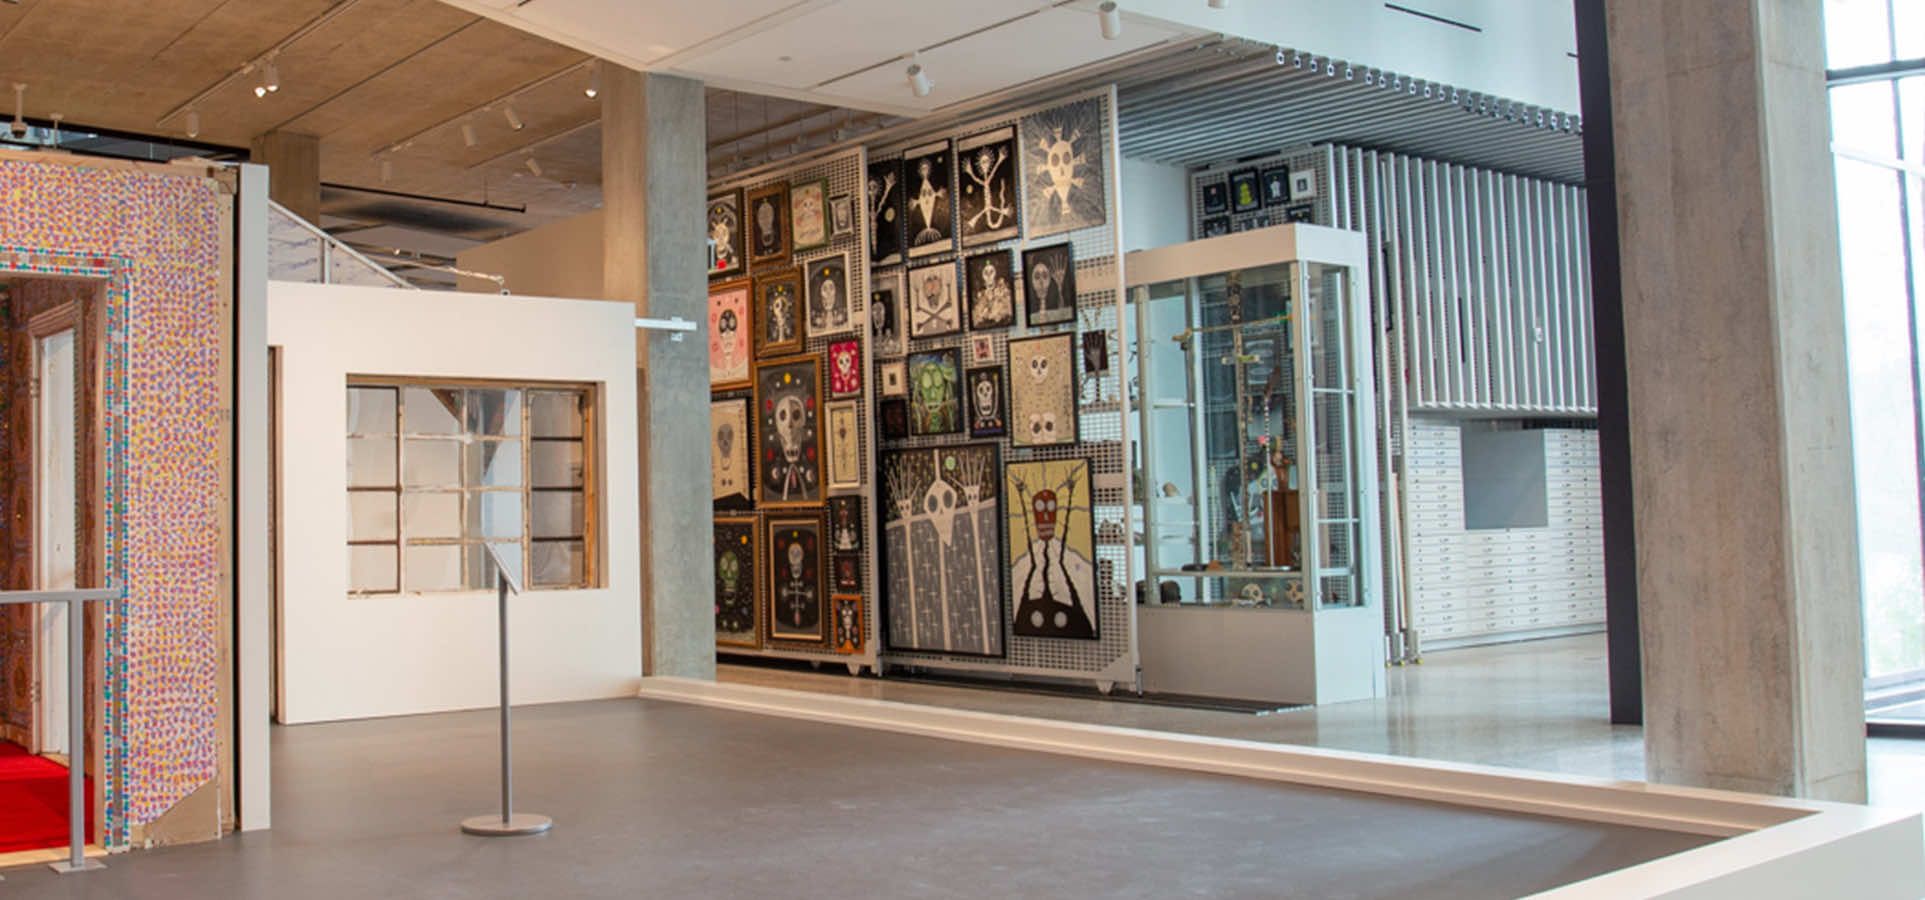 art museum collection displayed on hanging art racks